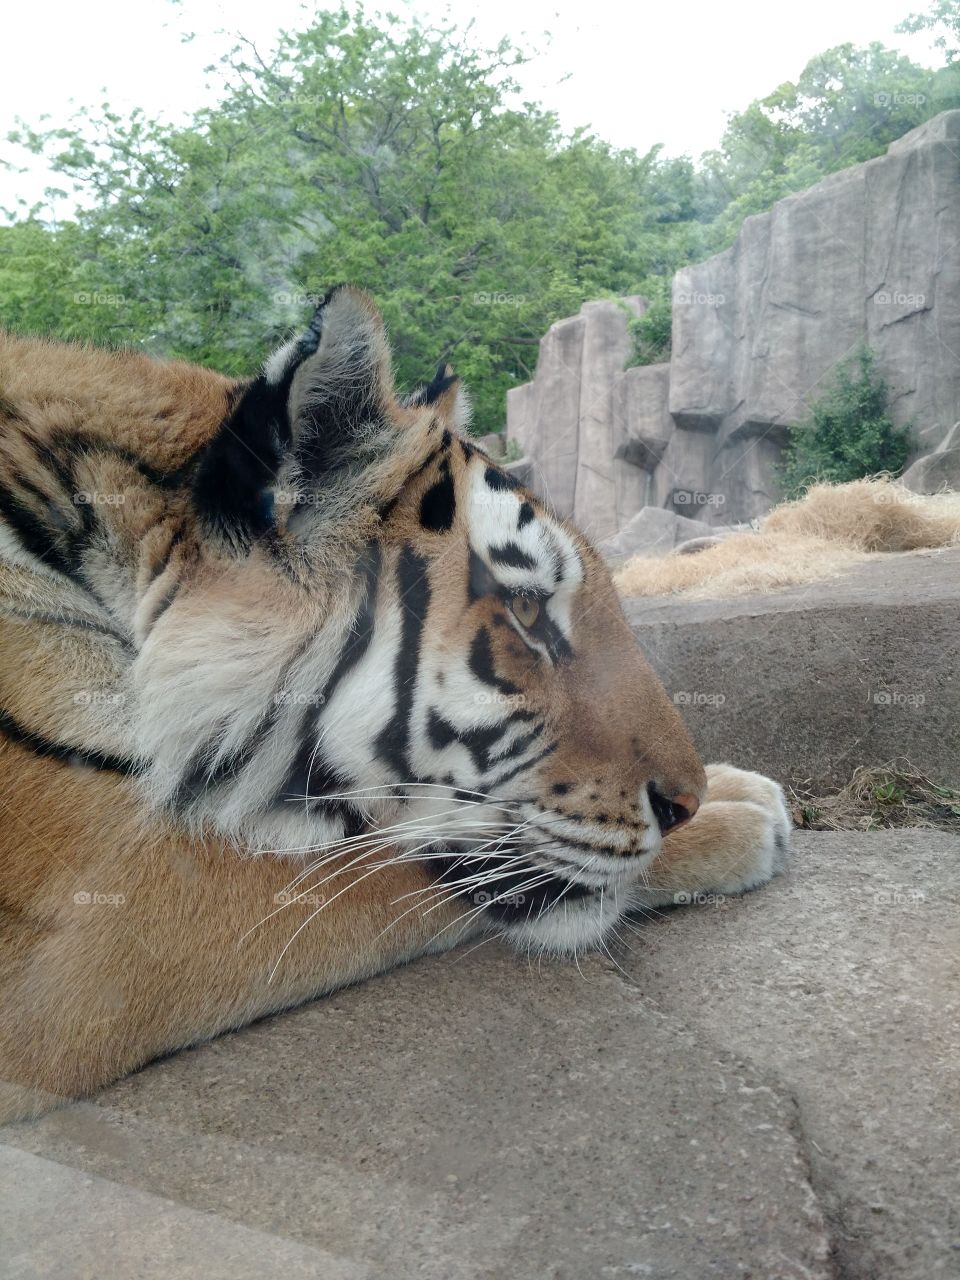 zoo tiger dreaming